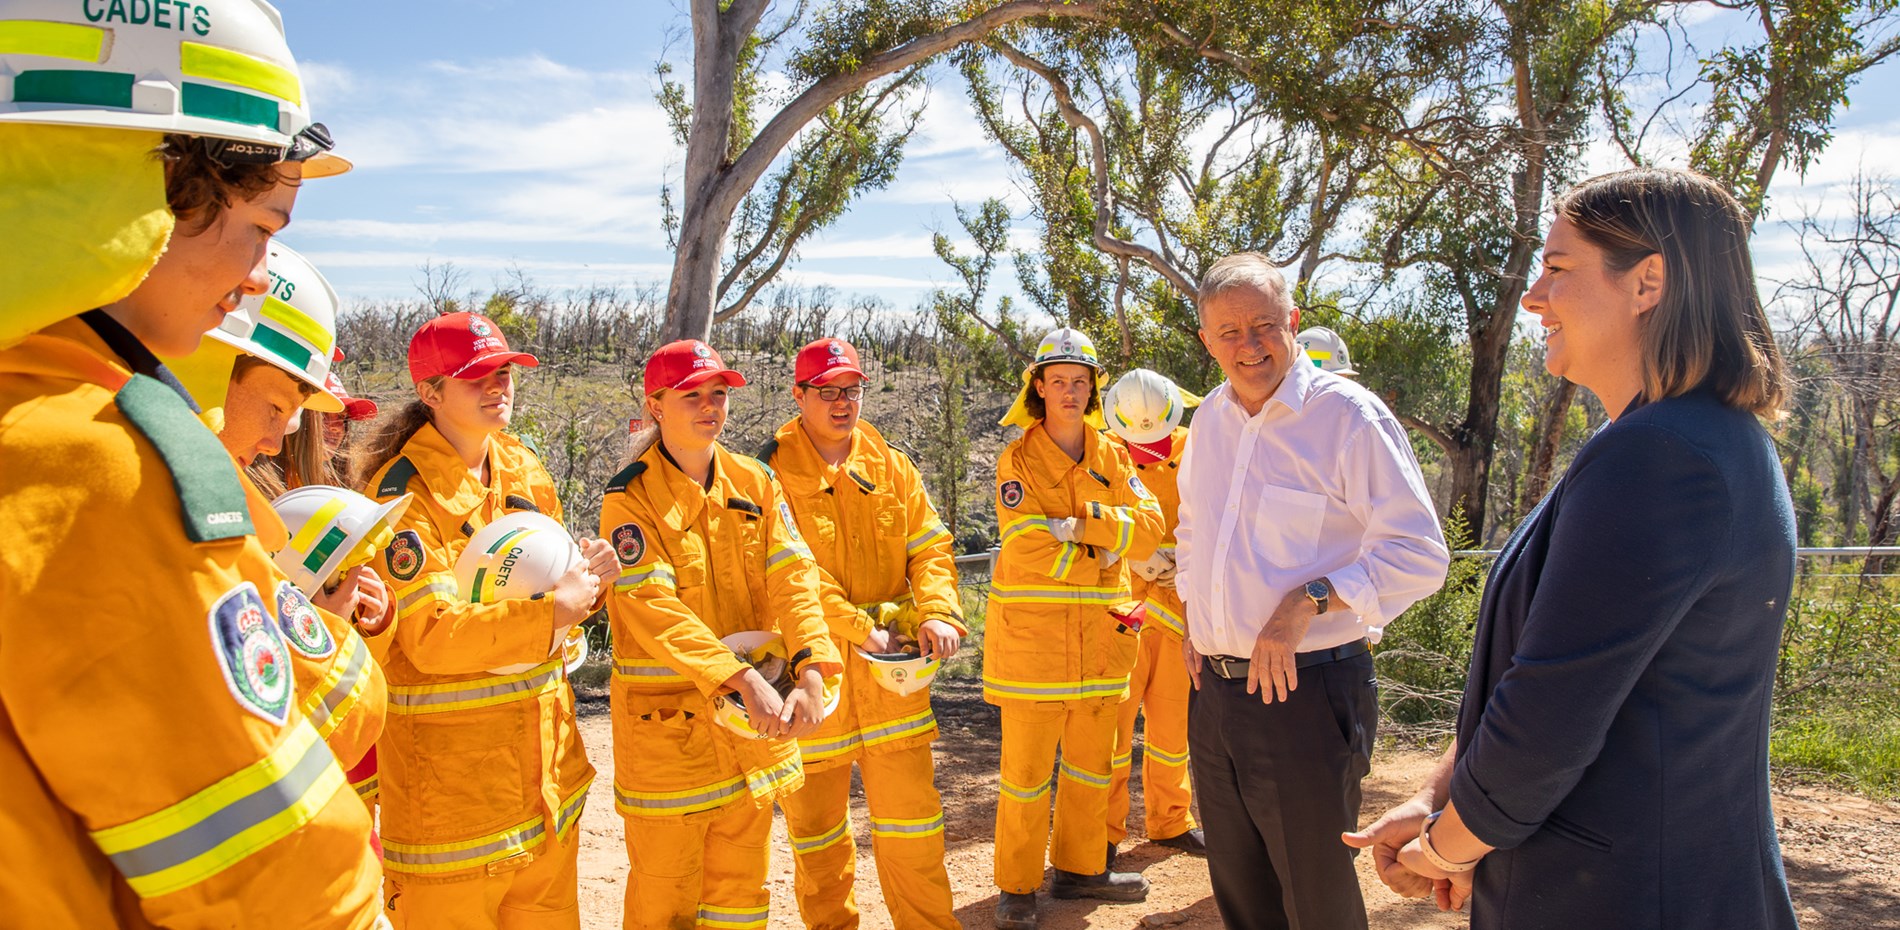 Coalition Senators insult bushfire victims Main Image